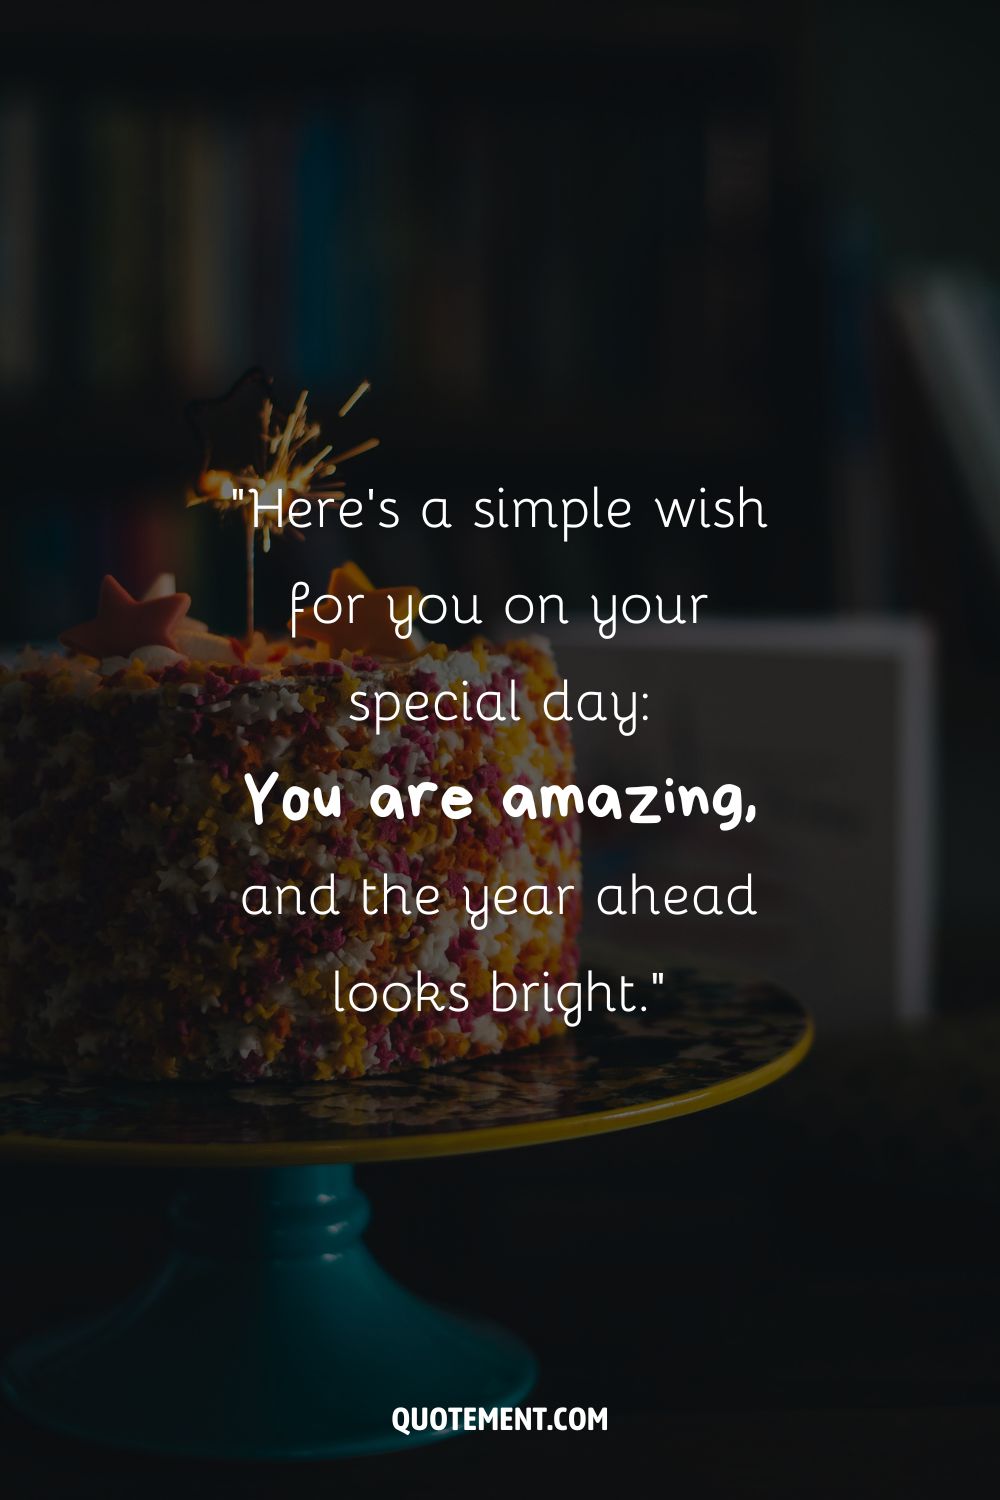 Simple inspirational birthday wish.
